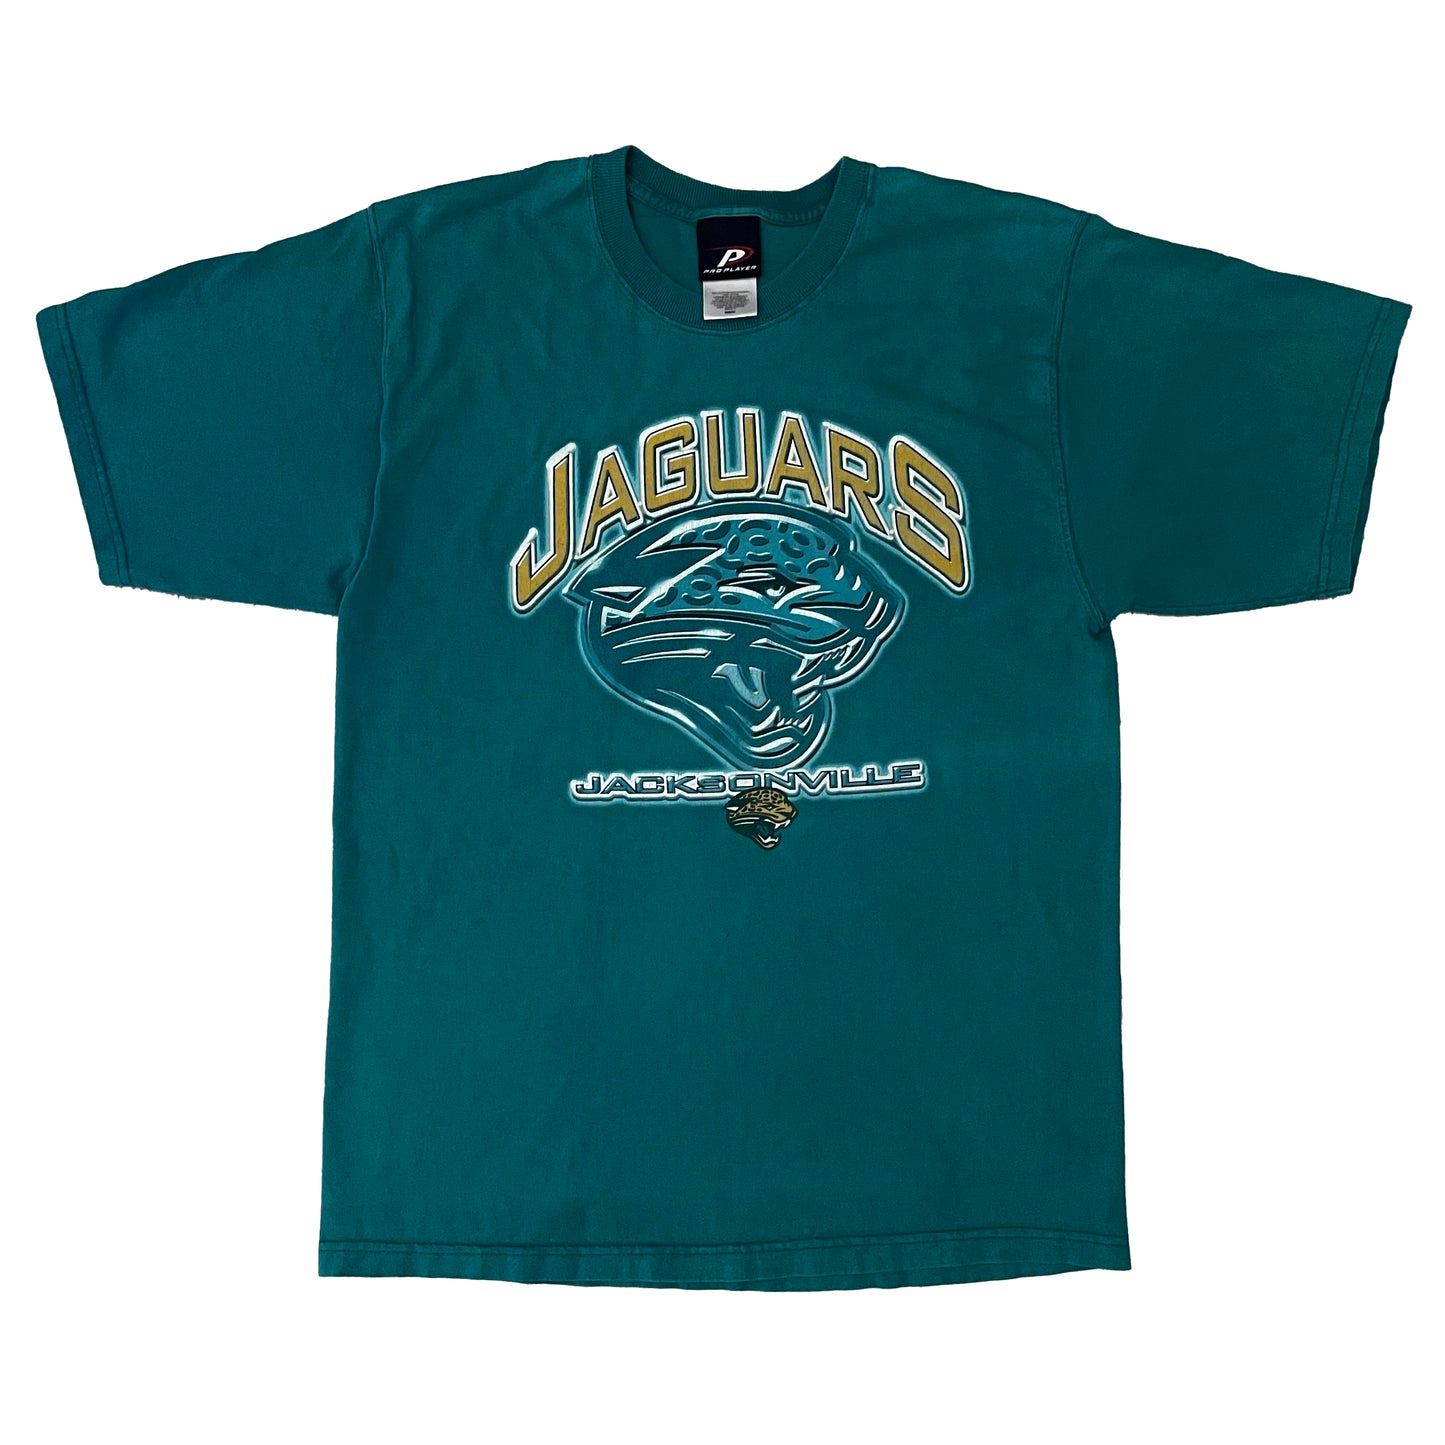 Jacksonville Jaguars shirt size MEDIUM